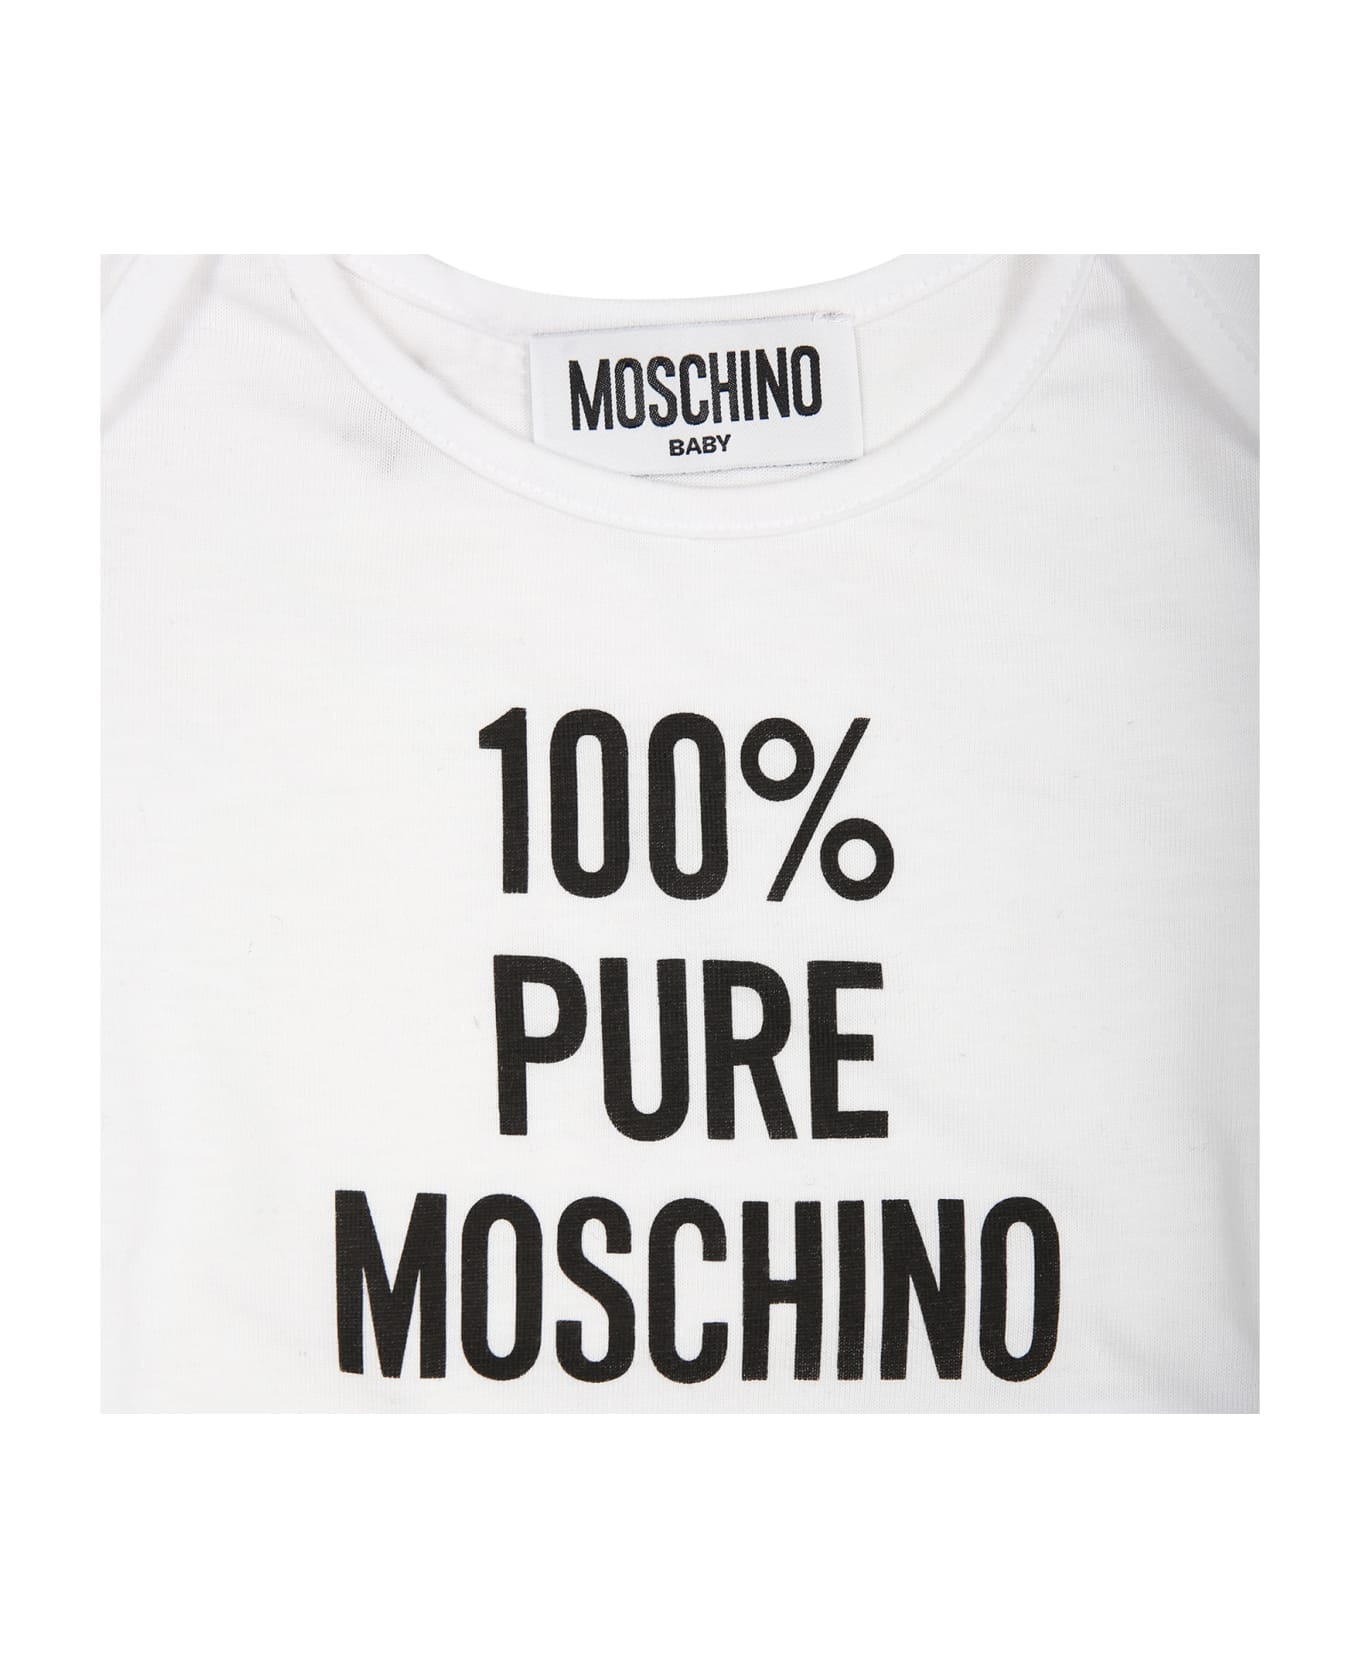 Moschino White Body For Baby Kids With Logo - White ボディスーツ＆セットアップ